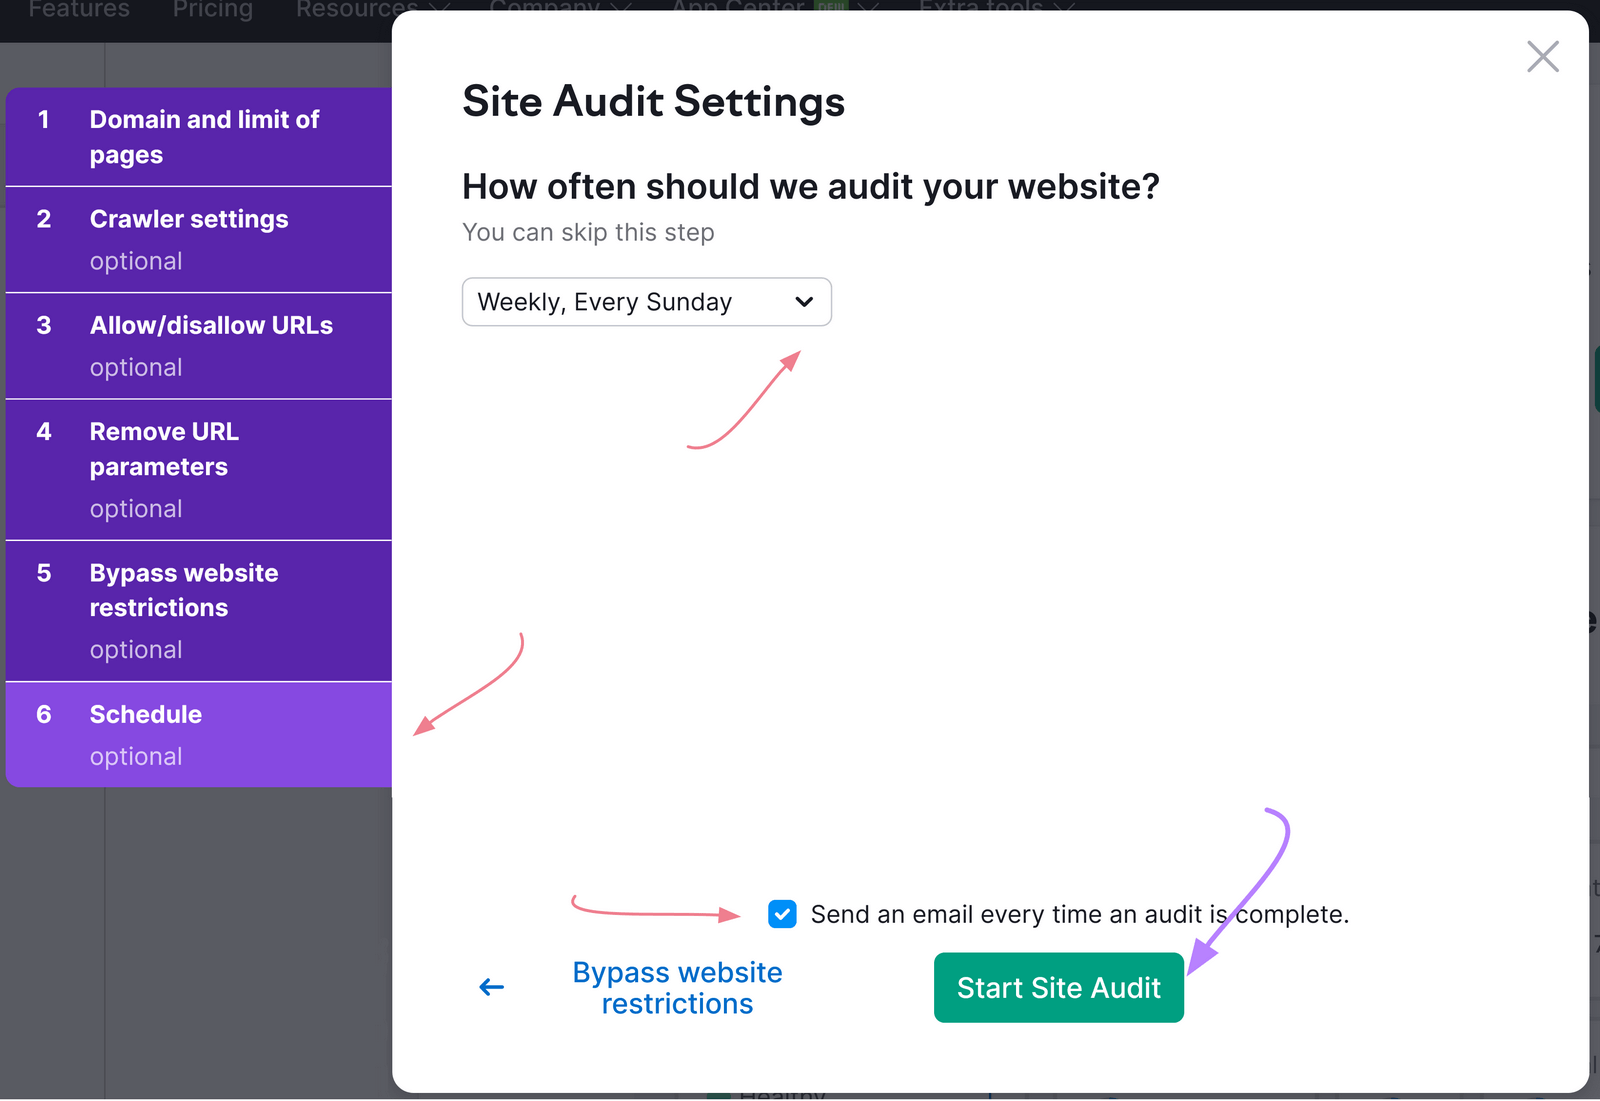 "Site Audit Settings" box